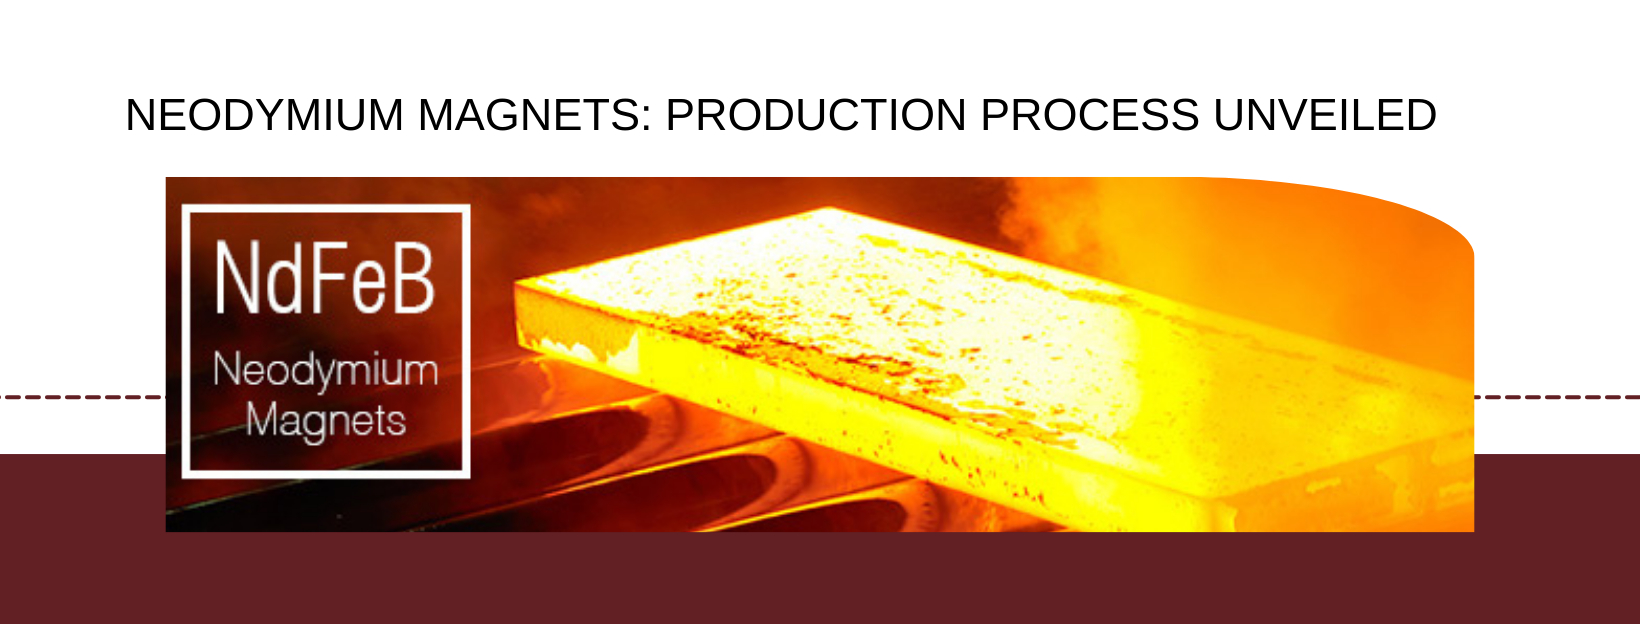 Neodymium Magnets: Production Process Unveiled